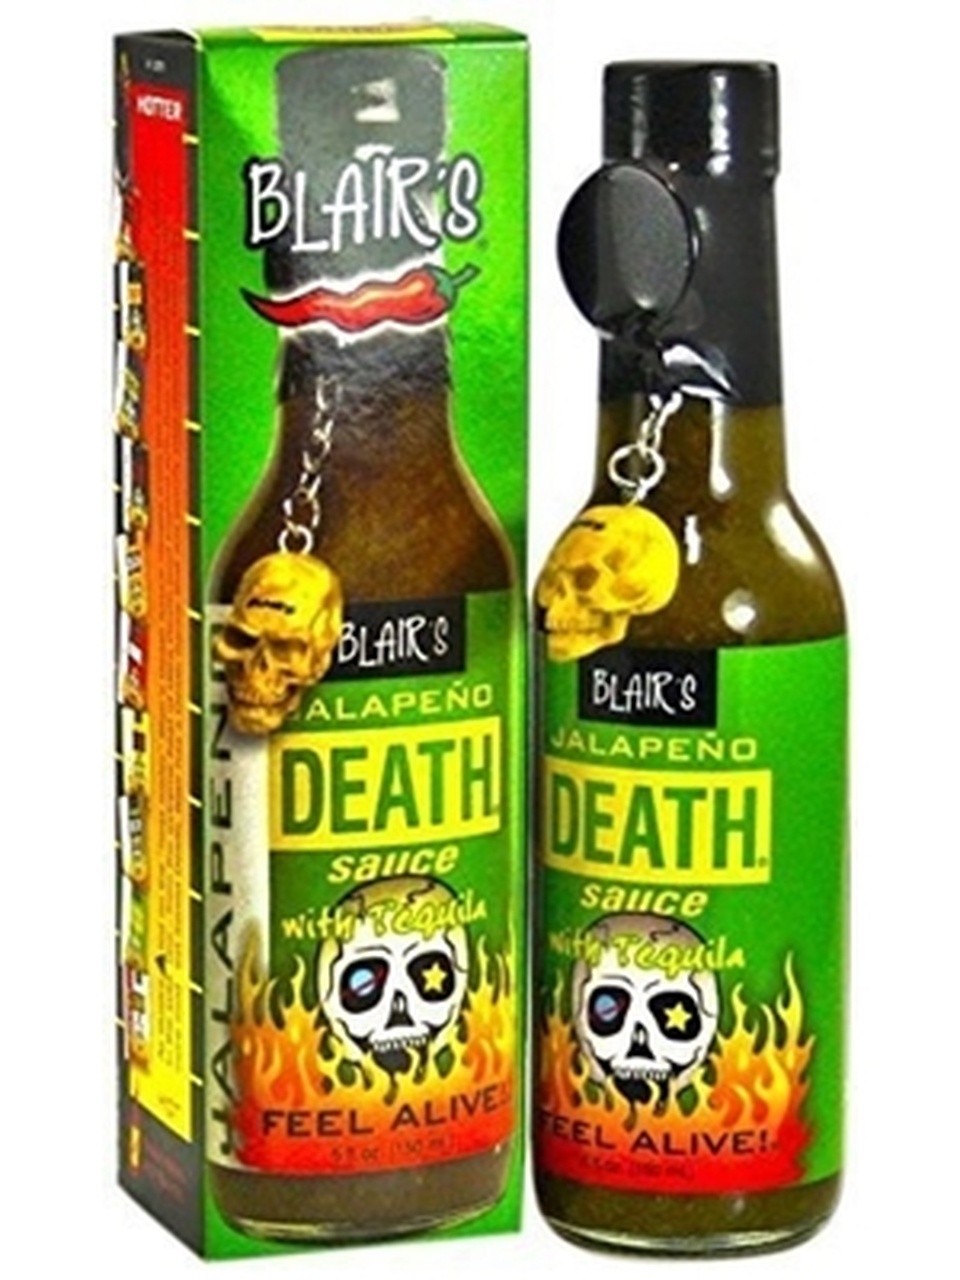 Blair's Death Sauce Jalapeno